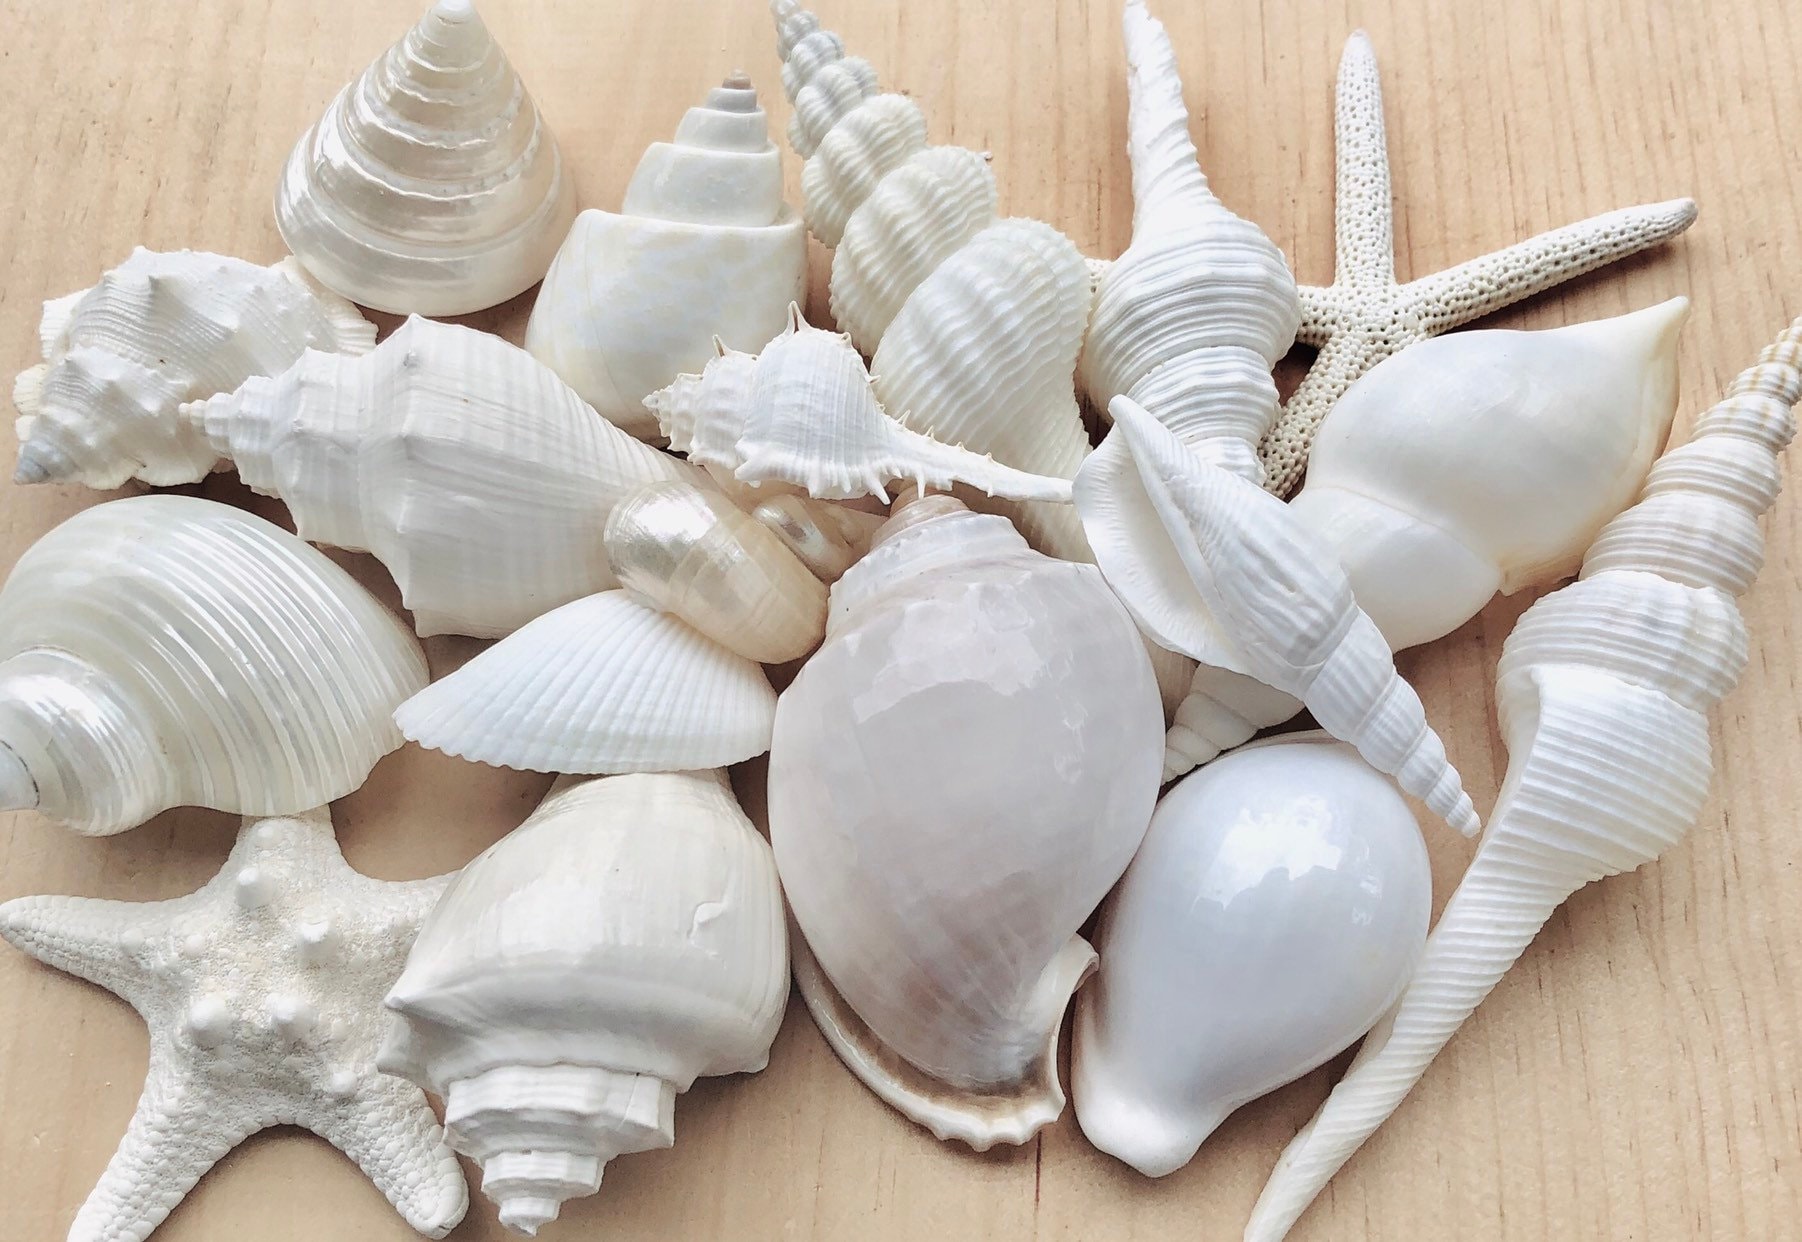 White Seashell Medium Wedding Mix (12-15 shells approx. .75-2 inches)